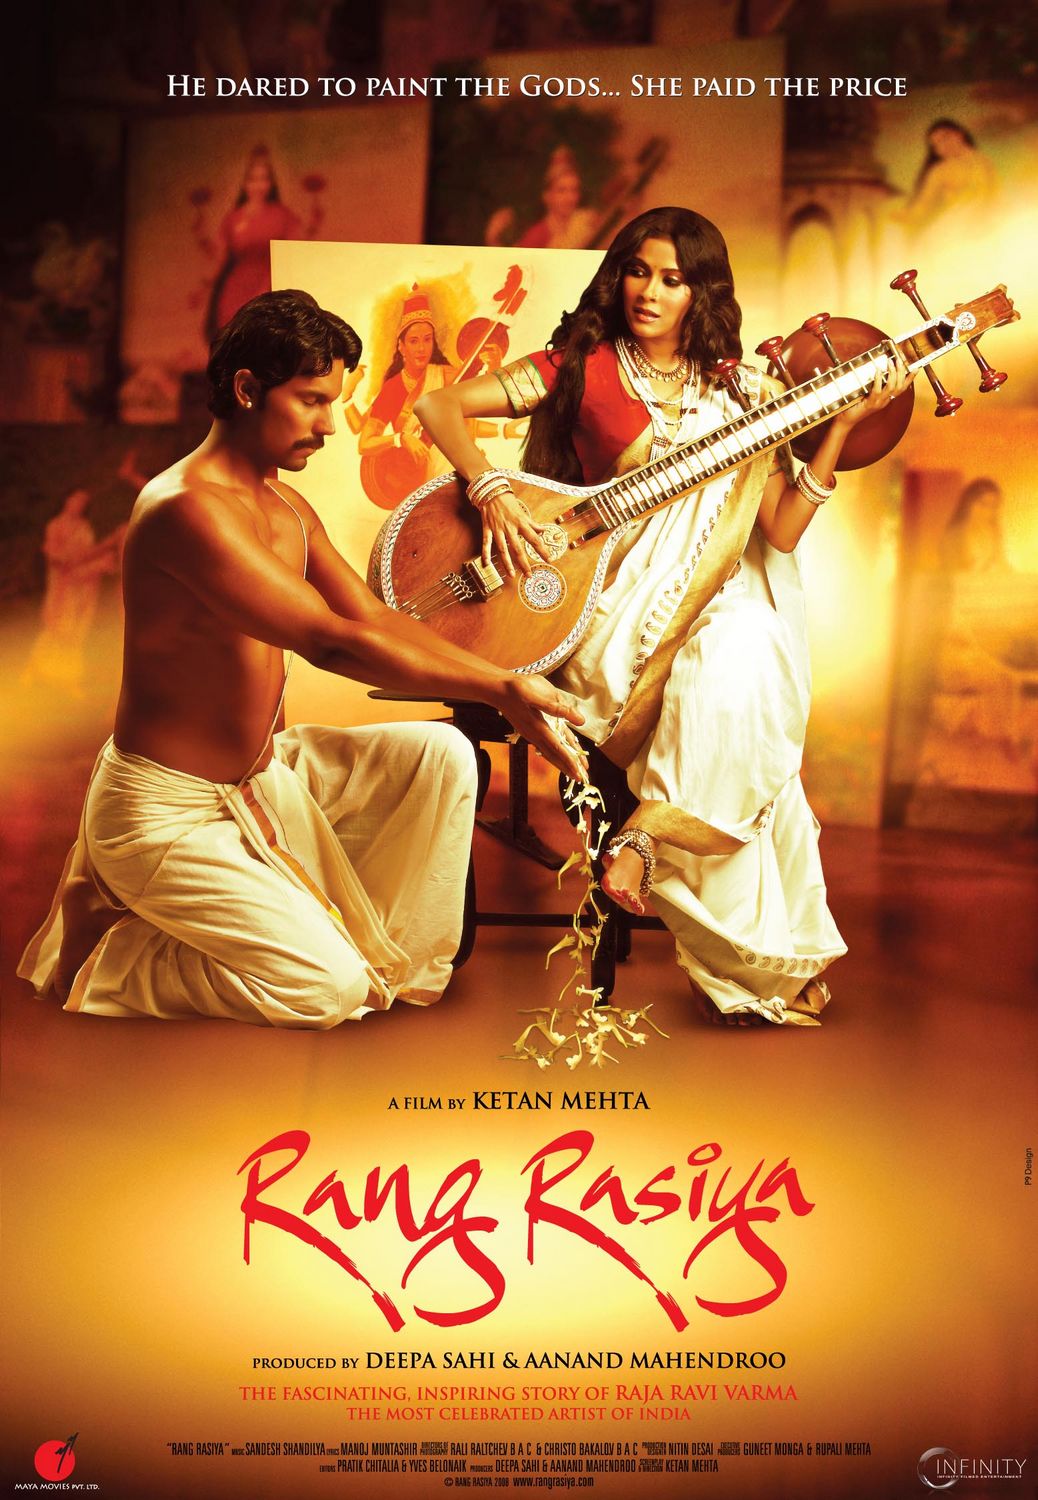 Extra Large Movie Poster Image for Rang rasiya (#3 of 9)